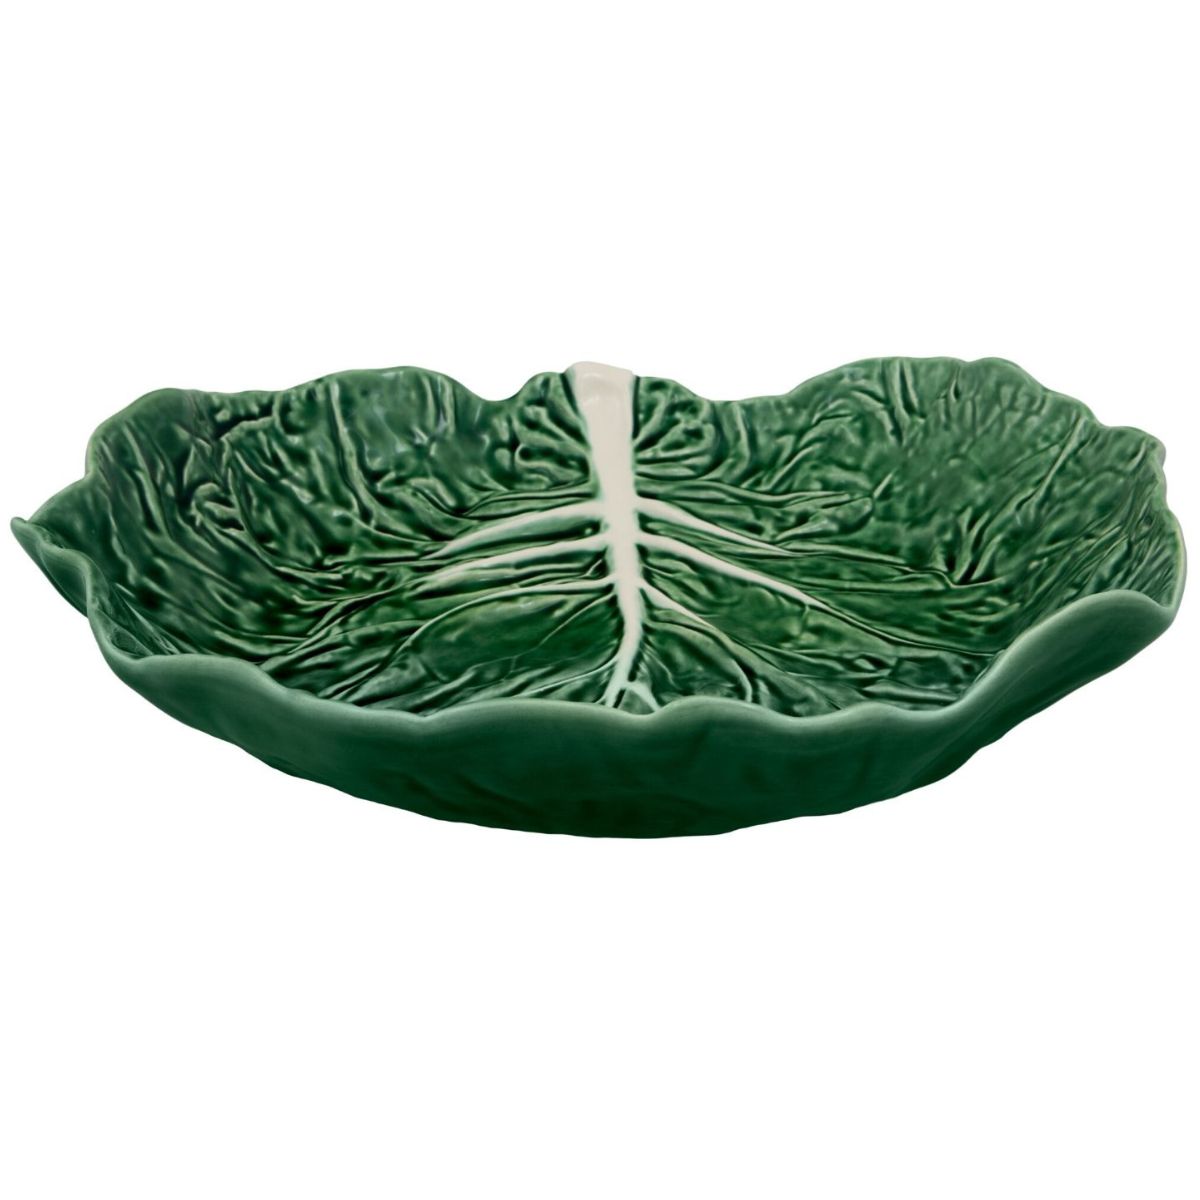 Cabbage Salad Bowl - Large